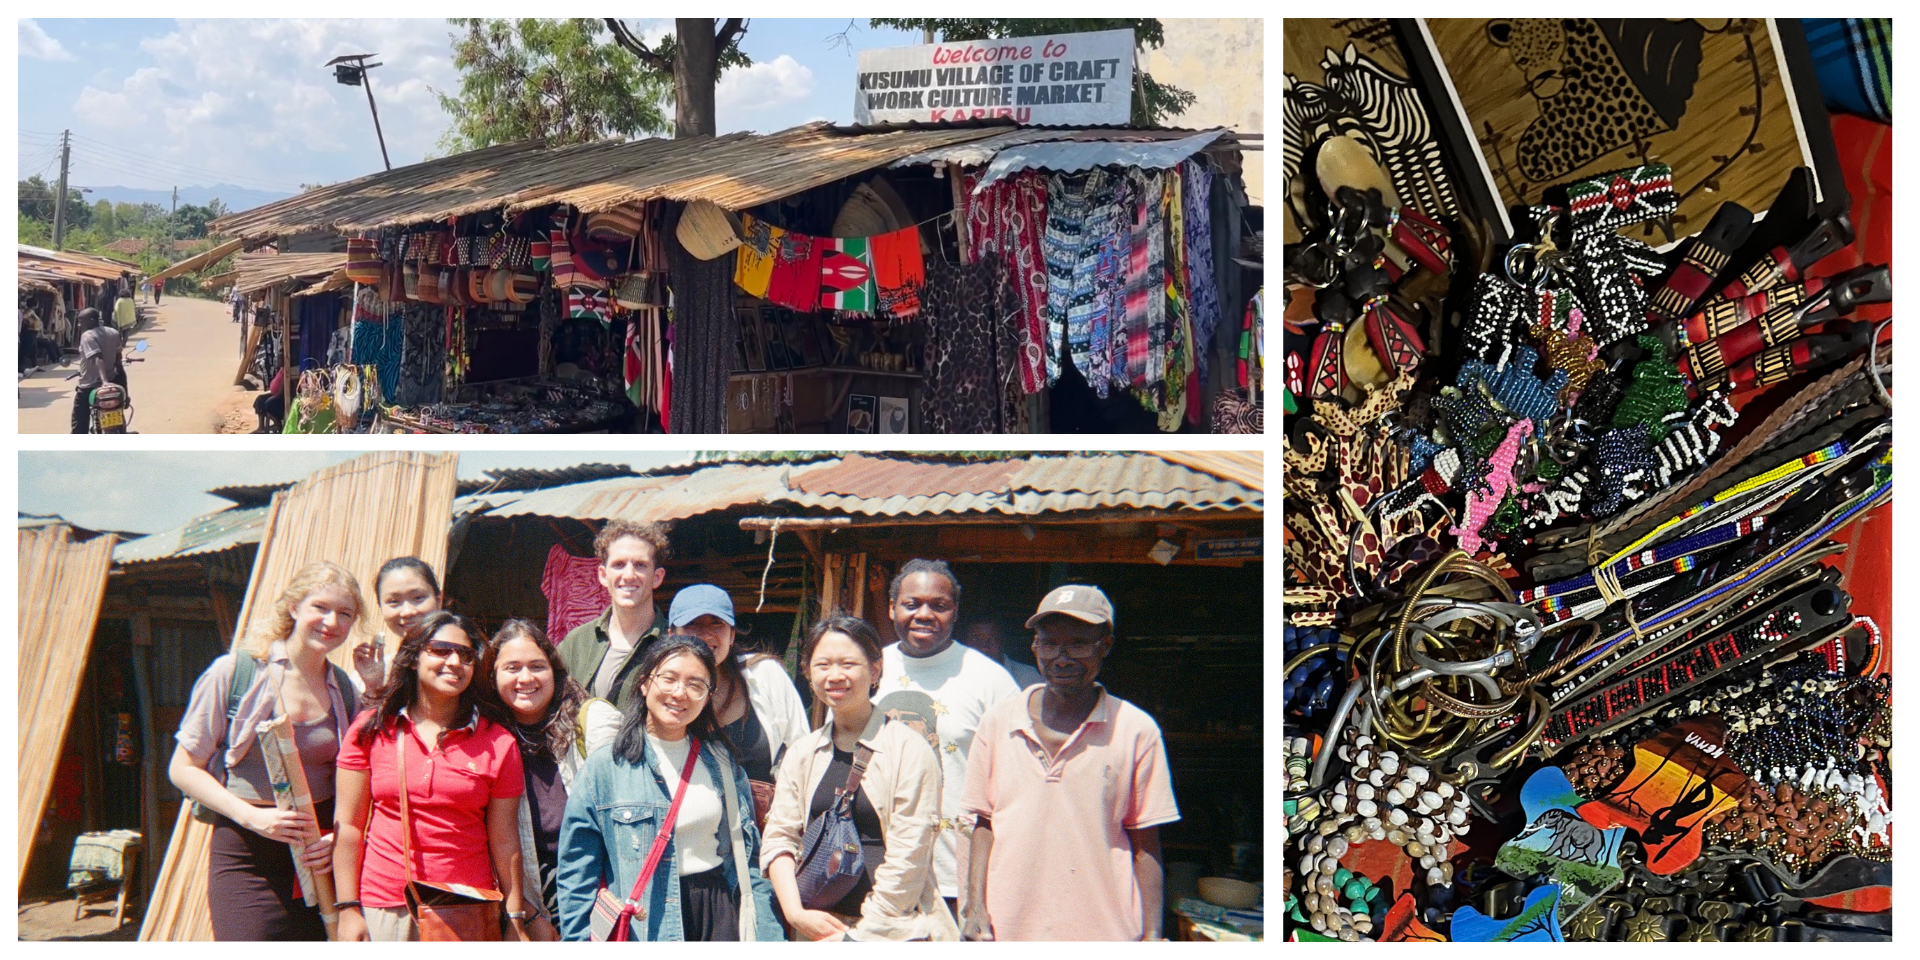 Kisumu Village of Craft Work Culture Market 